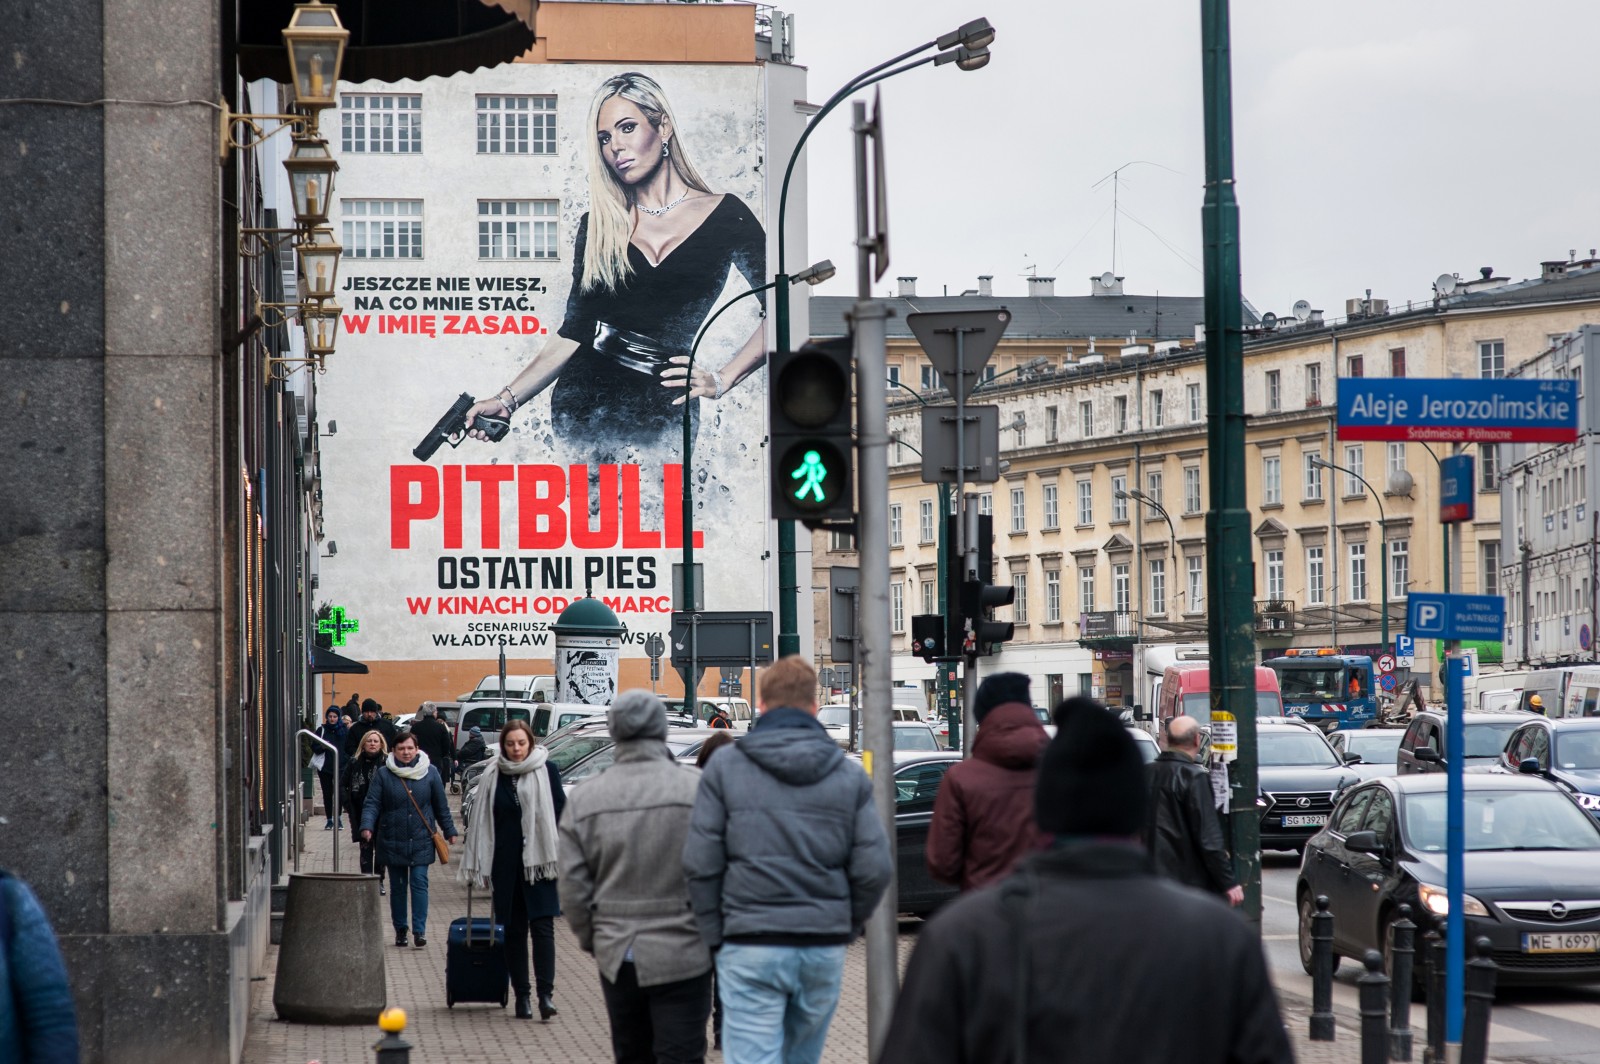 View on an advertising mural from the movie pitbull from aleje jerozolimskie on bracka street in warsaw | Pitbull. Ostatni pies | Portfolio